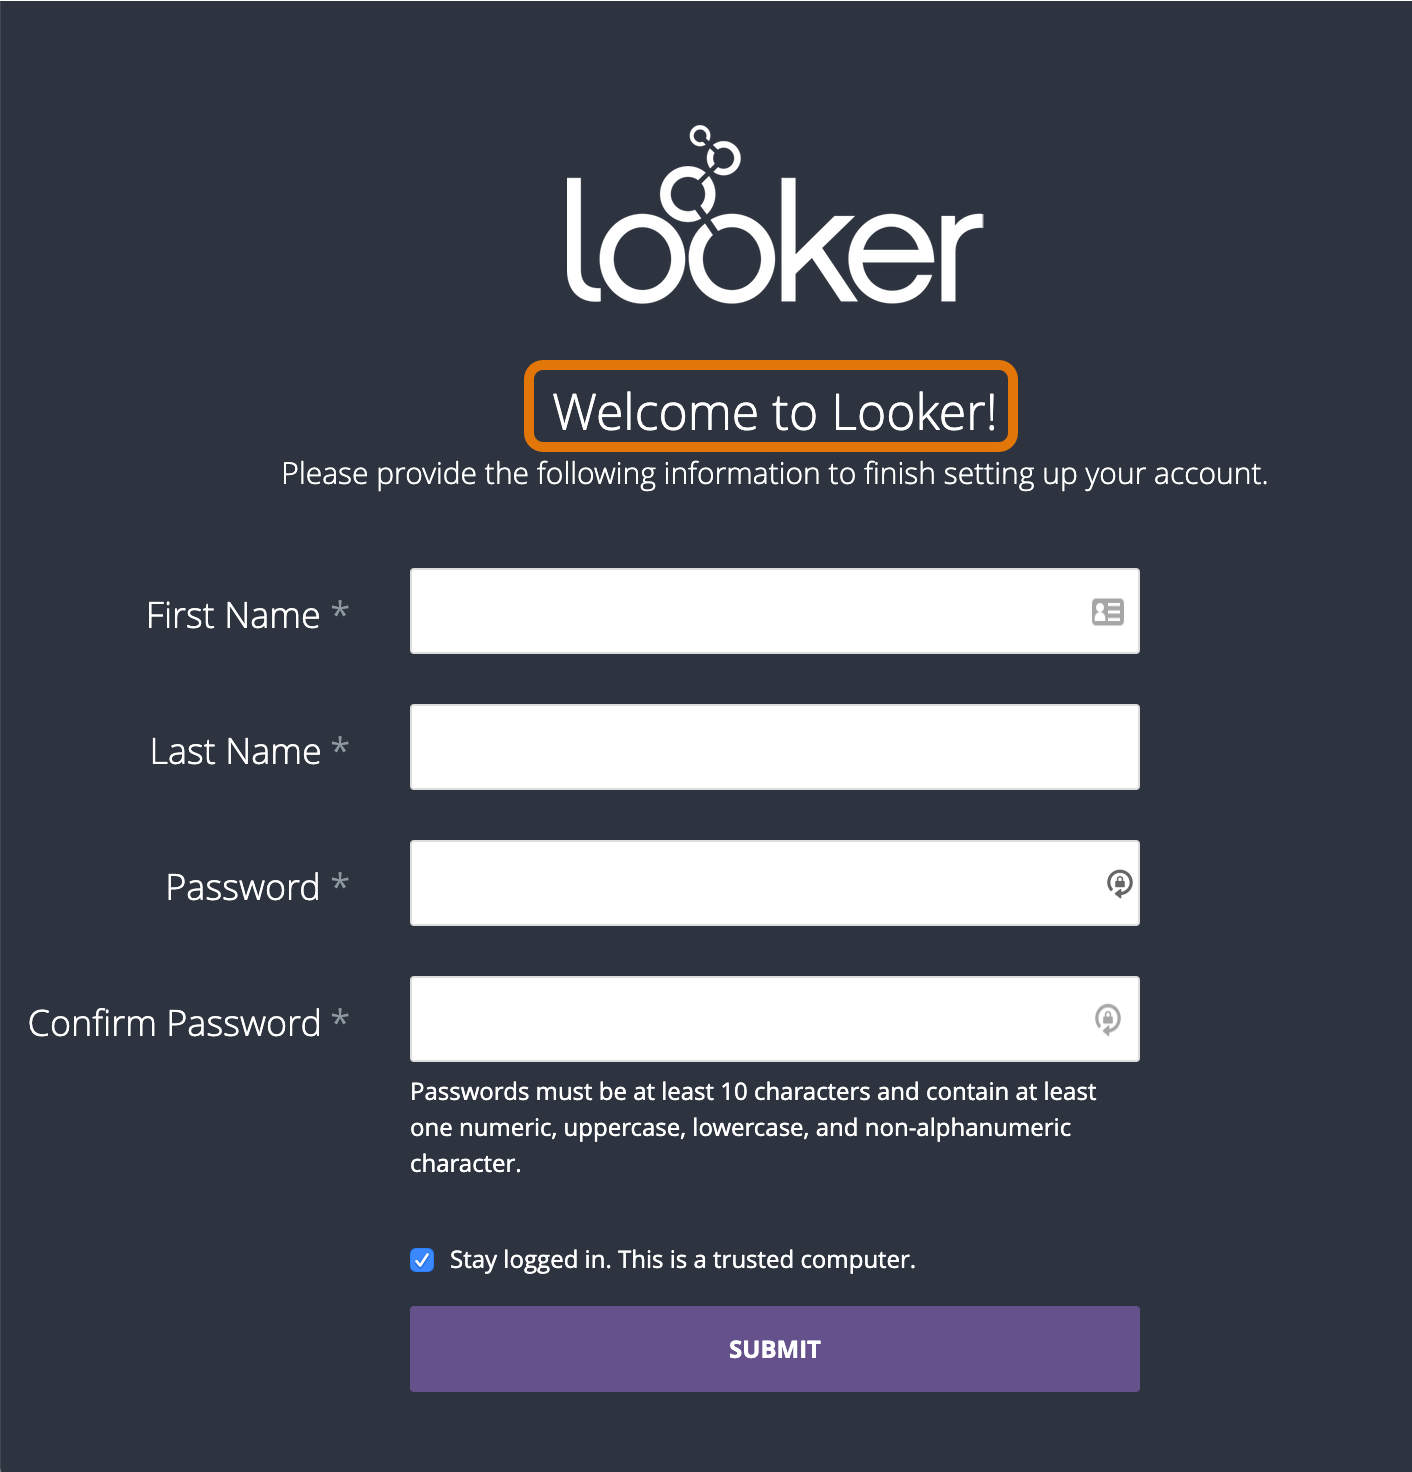 Looker 帐号设置页面的屏幕截图。页面顶部有一个 Looker 徽标，后跟文字“欢迎使用 Looker！”。